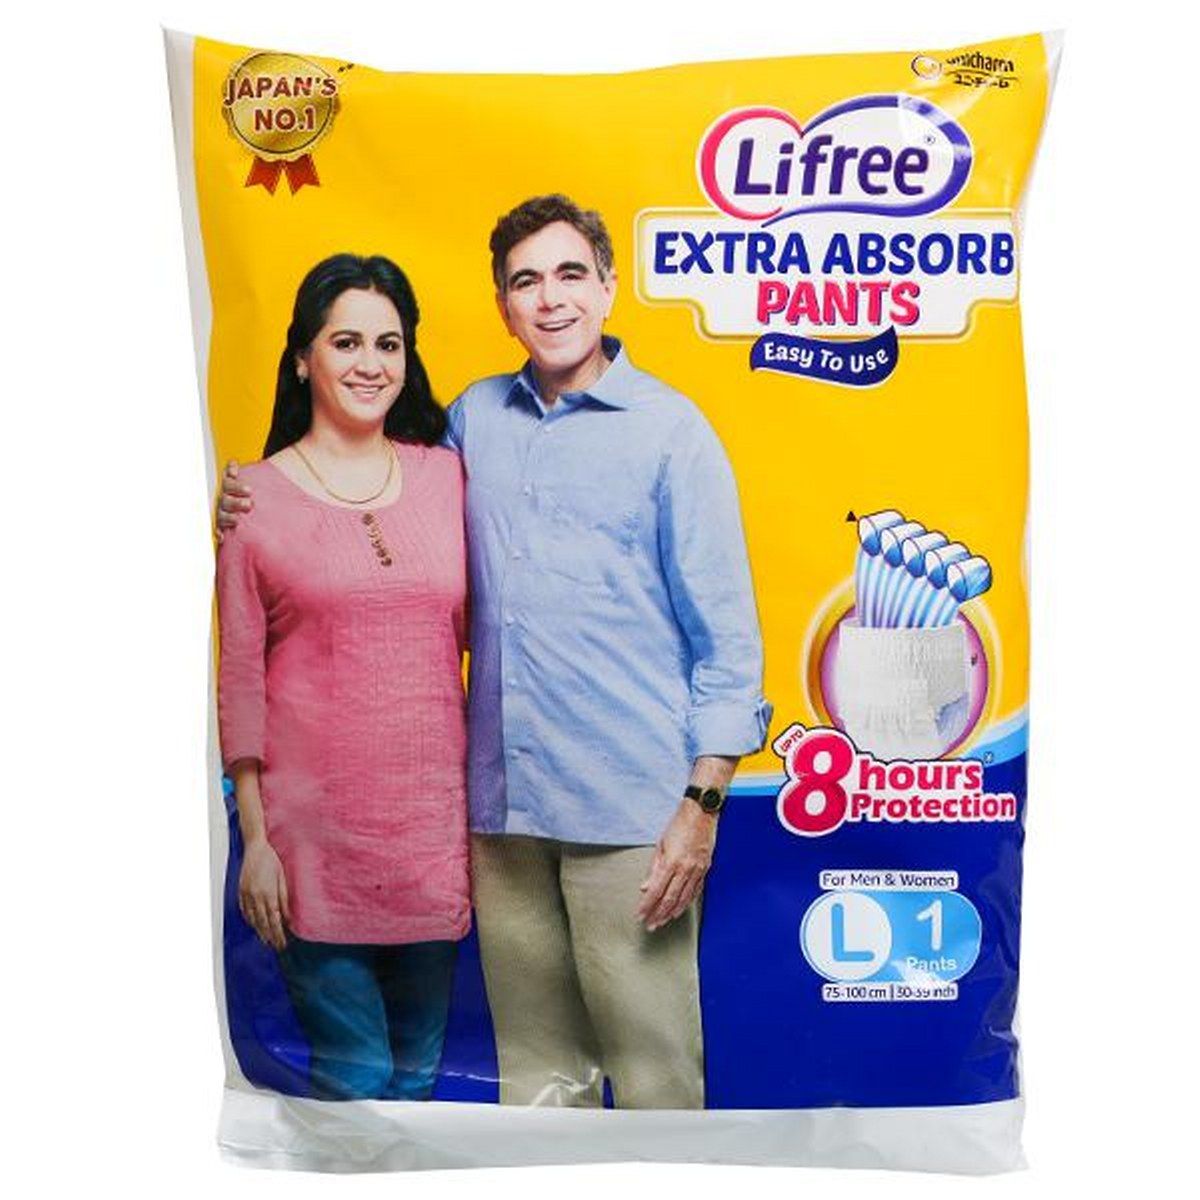 Buy Lifree Large Size Diaper Pants – 1 Count Online in UAE | Sharaf DG